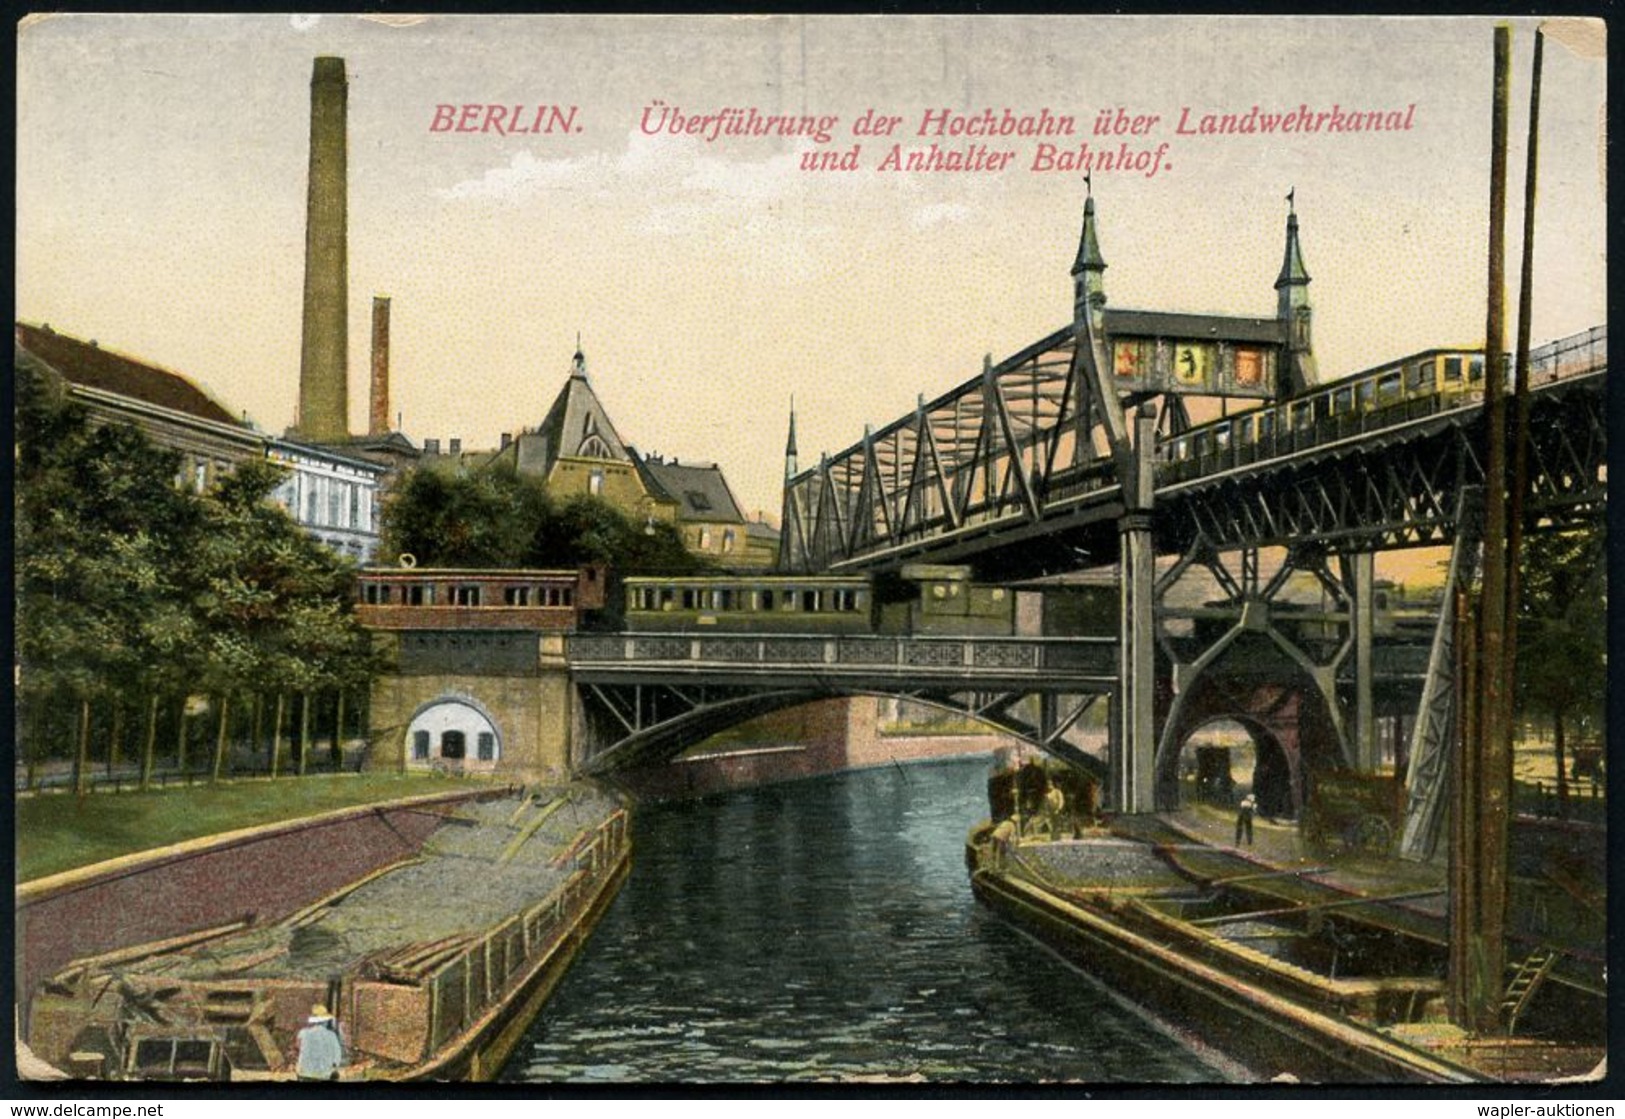 UNTERGRUNDBAHN /U-BAHN : Berlin-Kreuzberg 1909/28 U-Bahn Landwehrkanal/ Anhalter Bhf., 10 verschiedene Color-Foto-Ak. , 